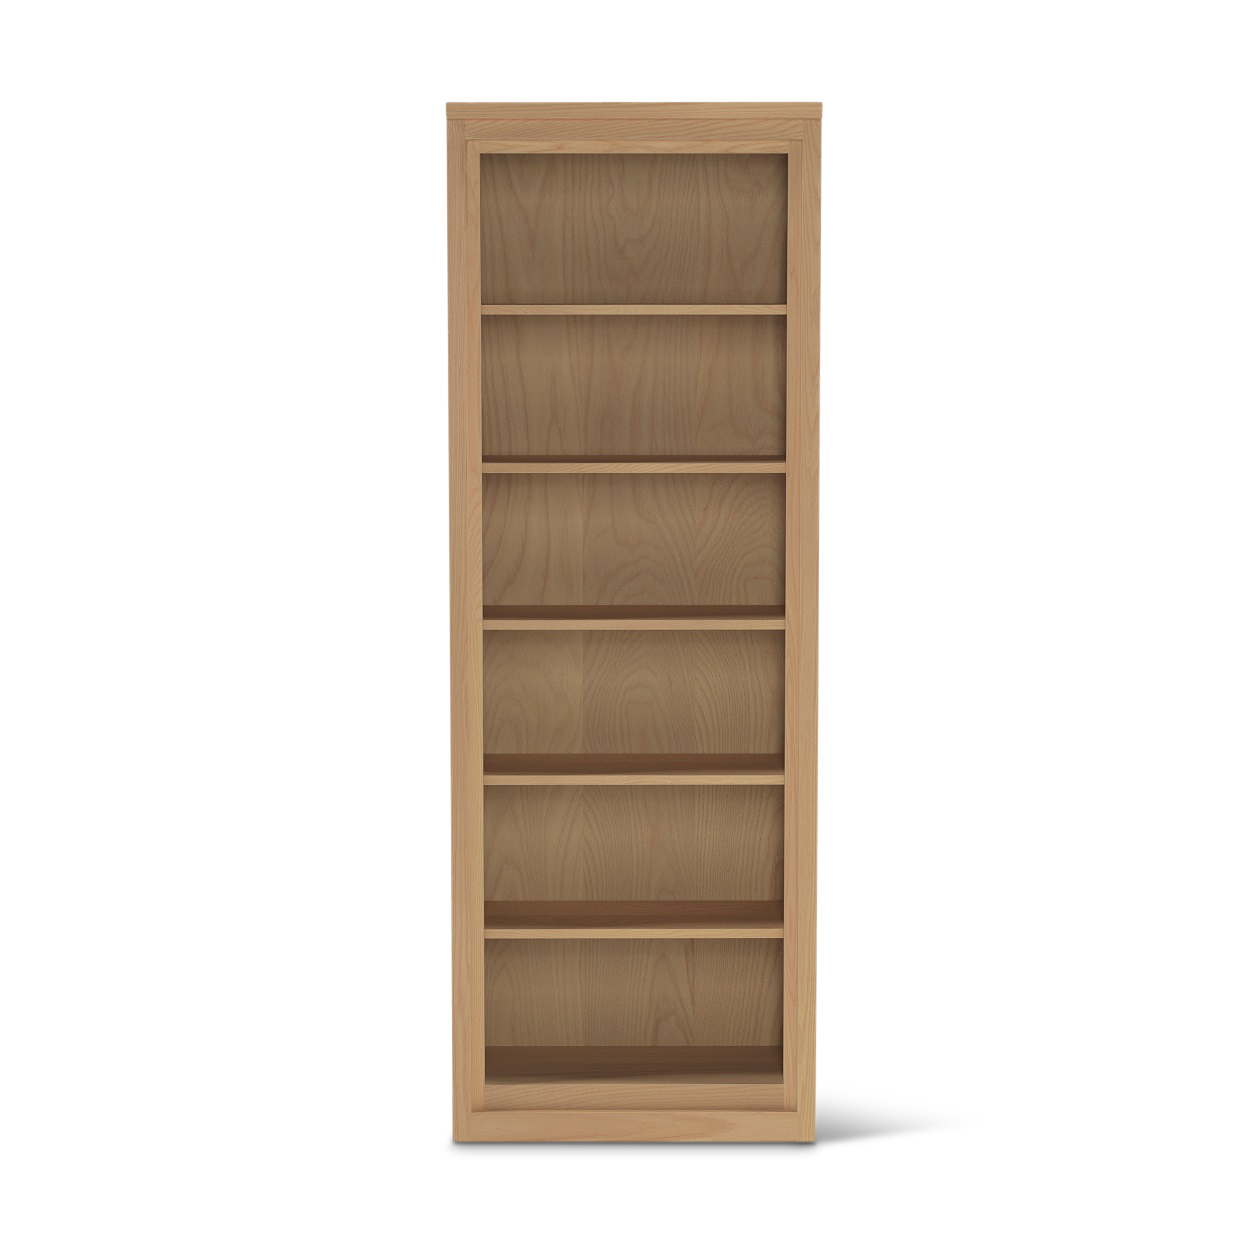 78" tall Framed_44 modern ash wood bookshelf with solid wood trim